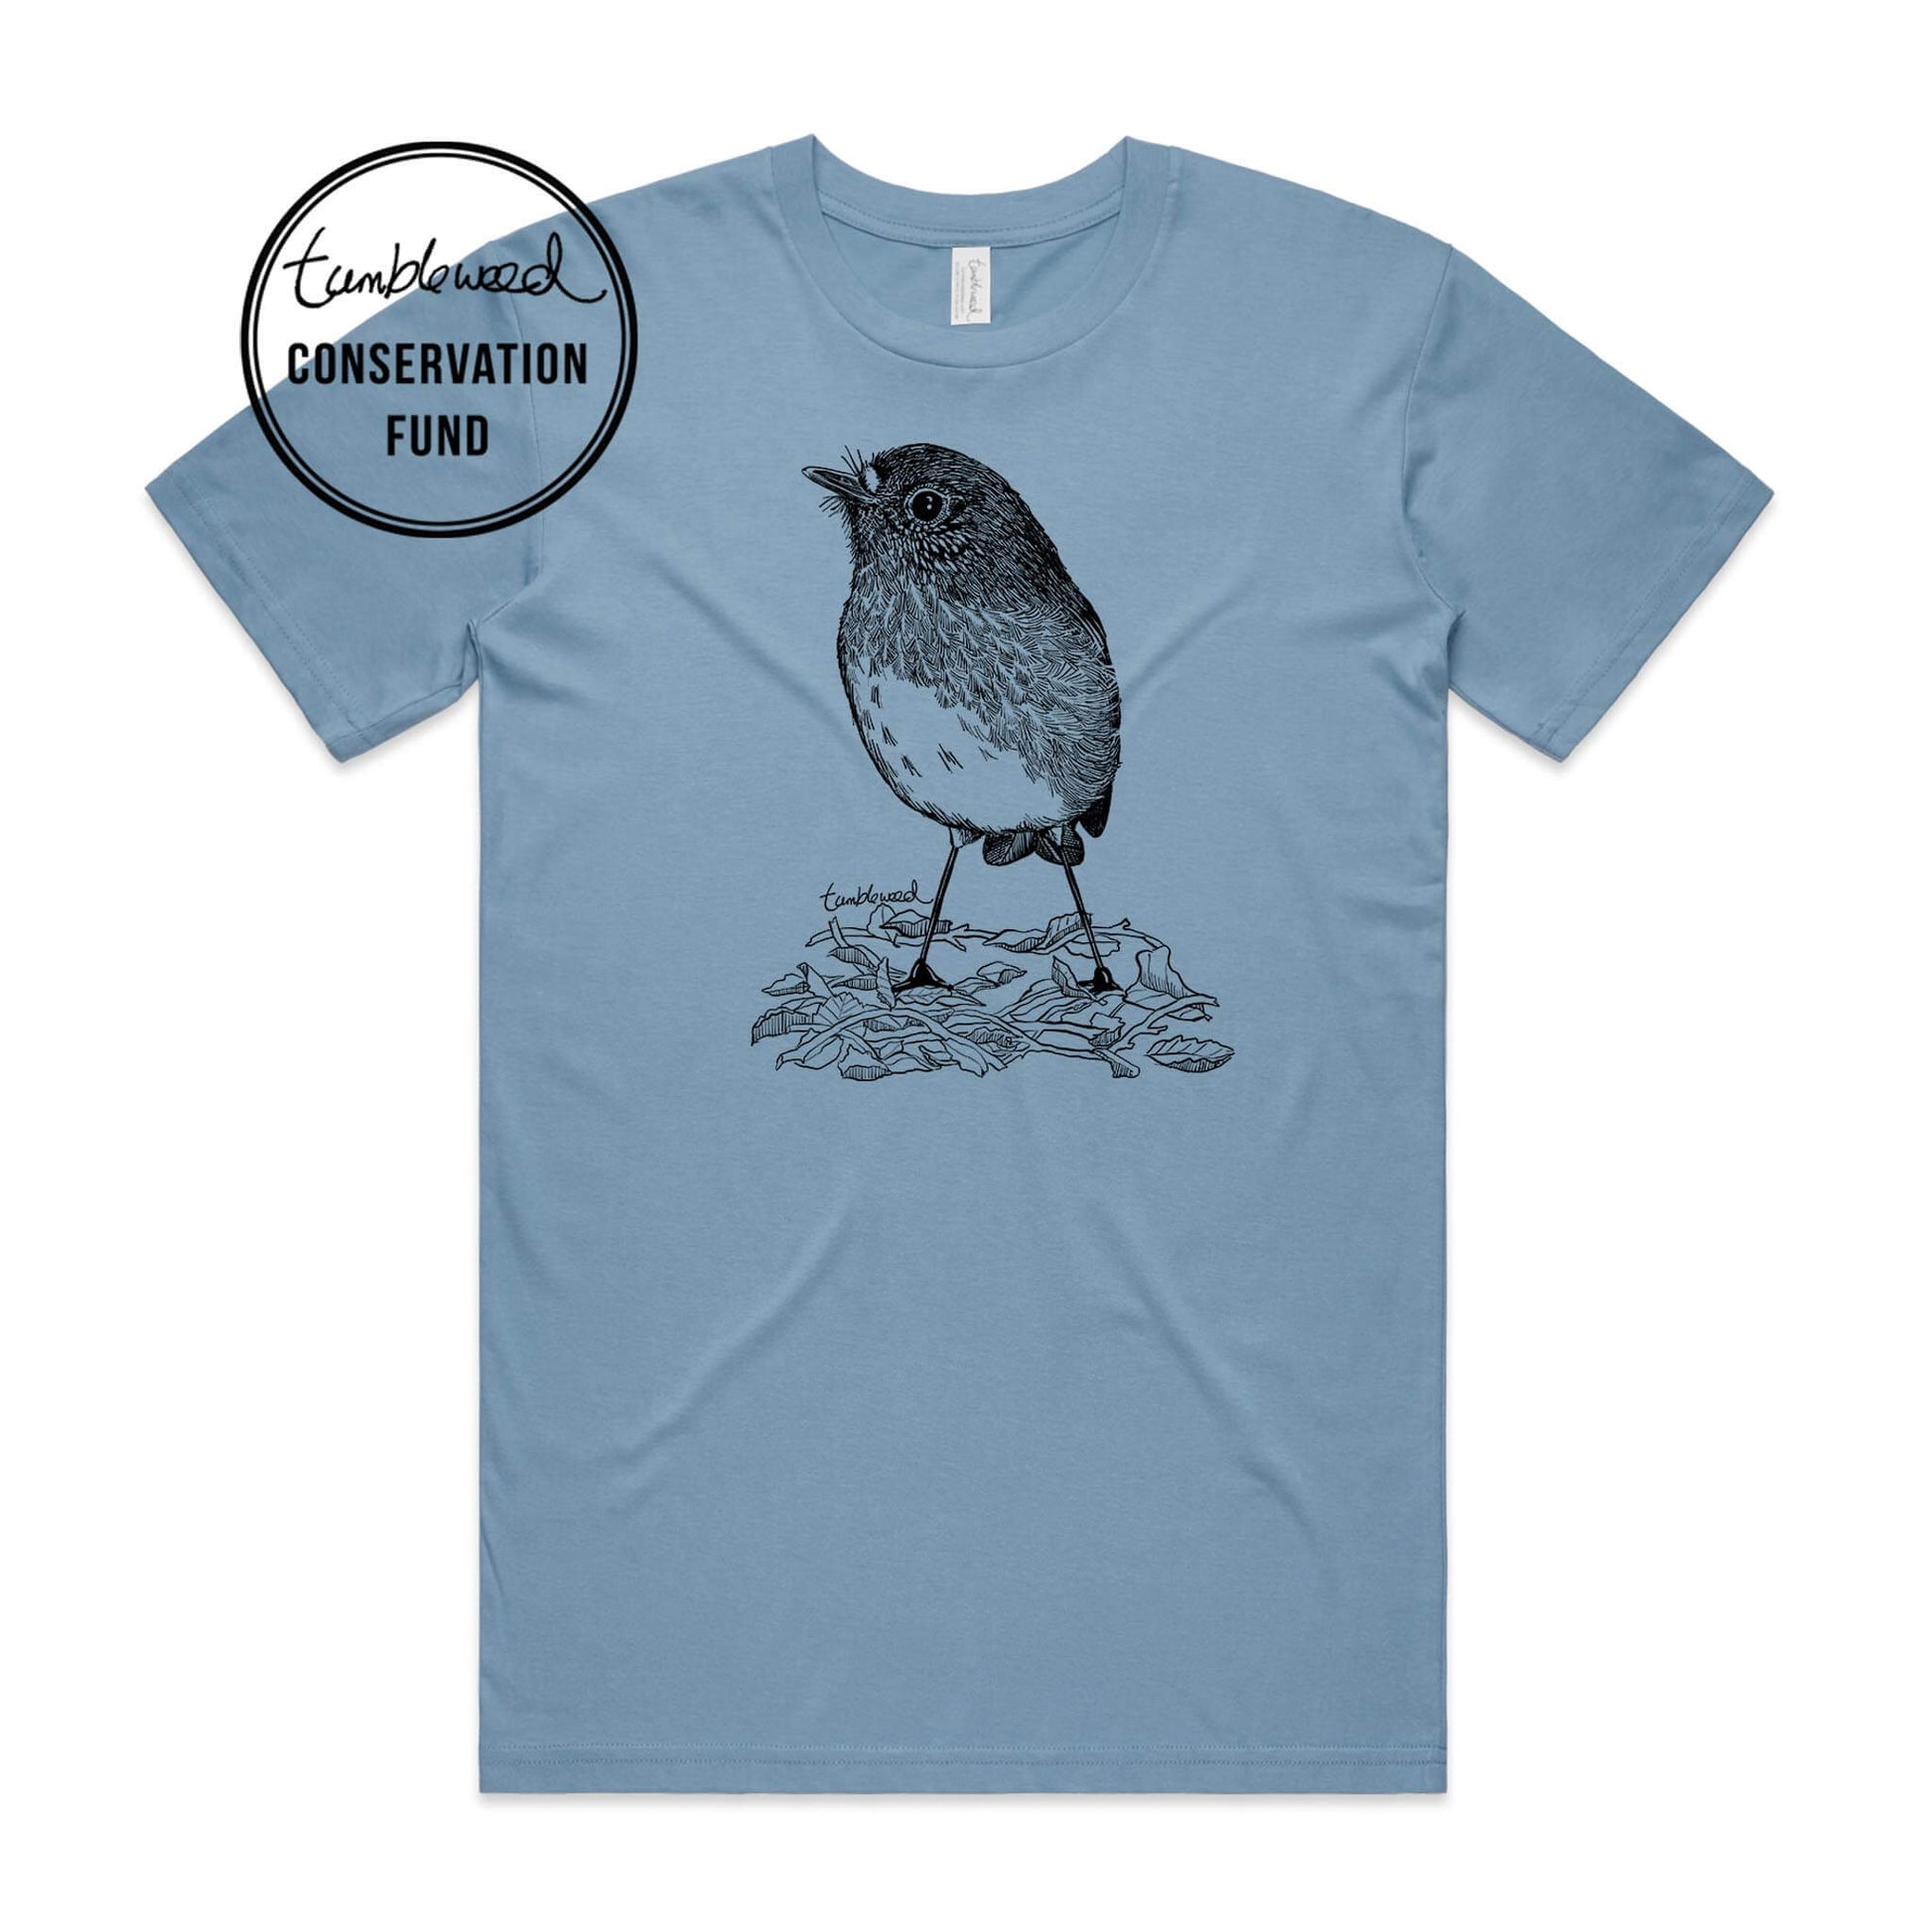 Sage, male t-shirt featuring a screen printed North Island Robin/toutouwai design.